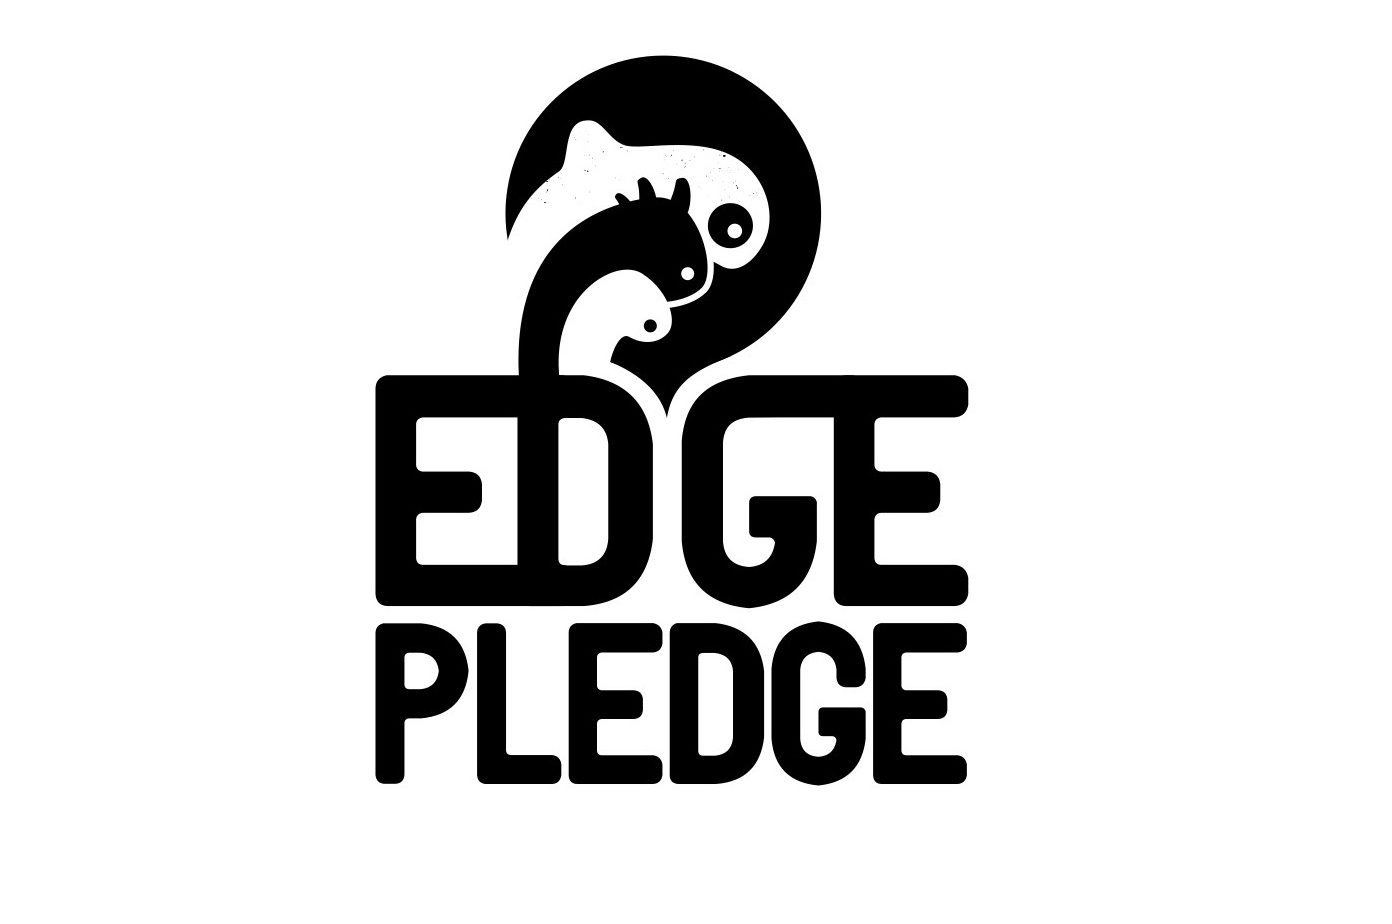 Pledge for threatened species